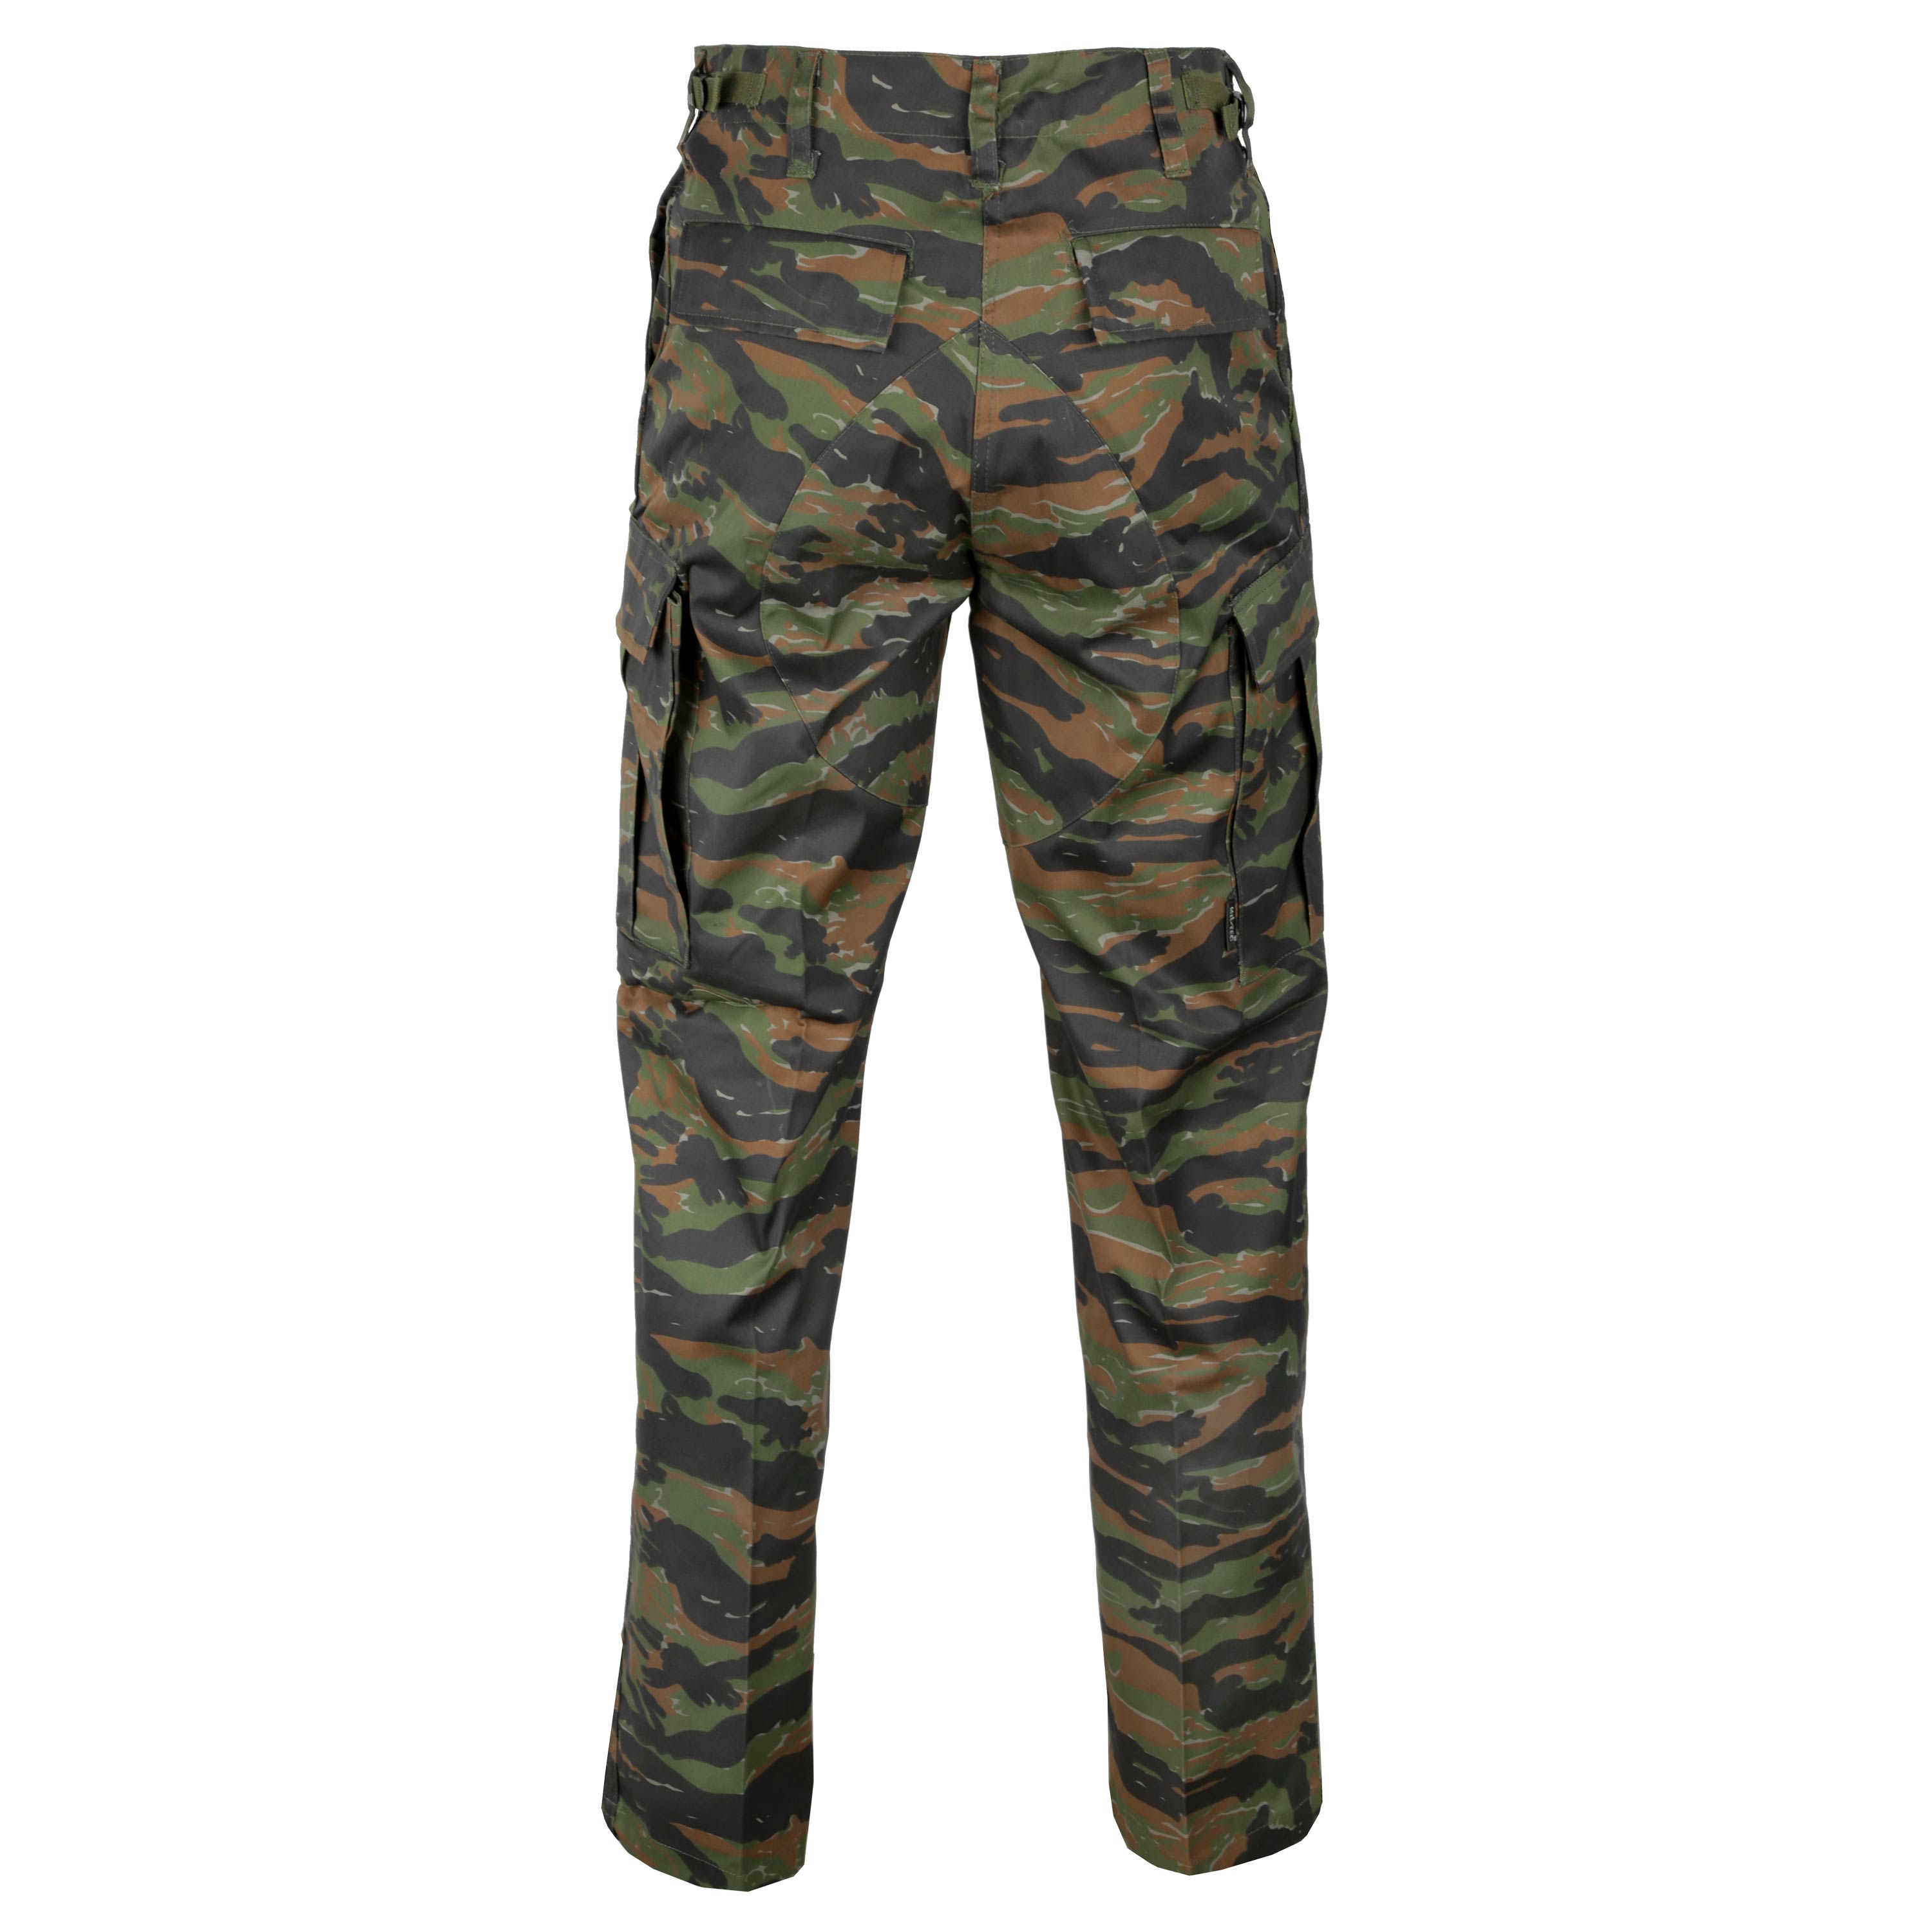 Purchase the Mil-Tec BDU Style Pants tigerstripe by ASMC